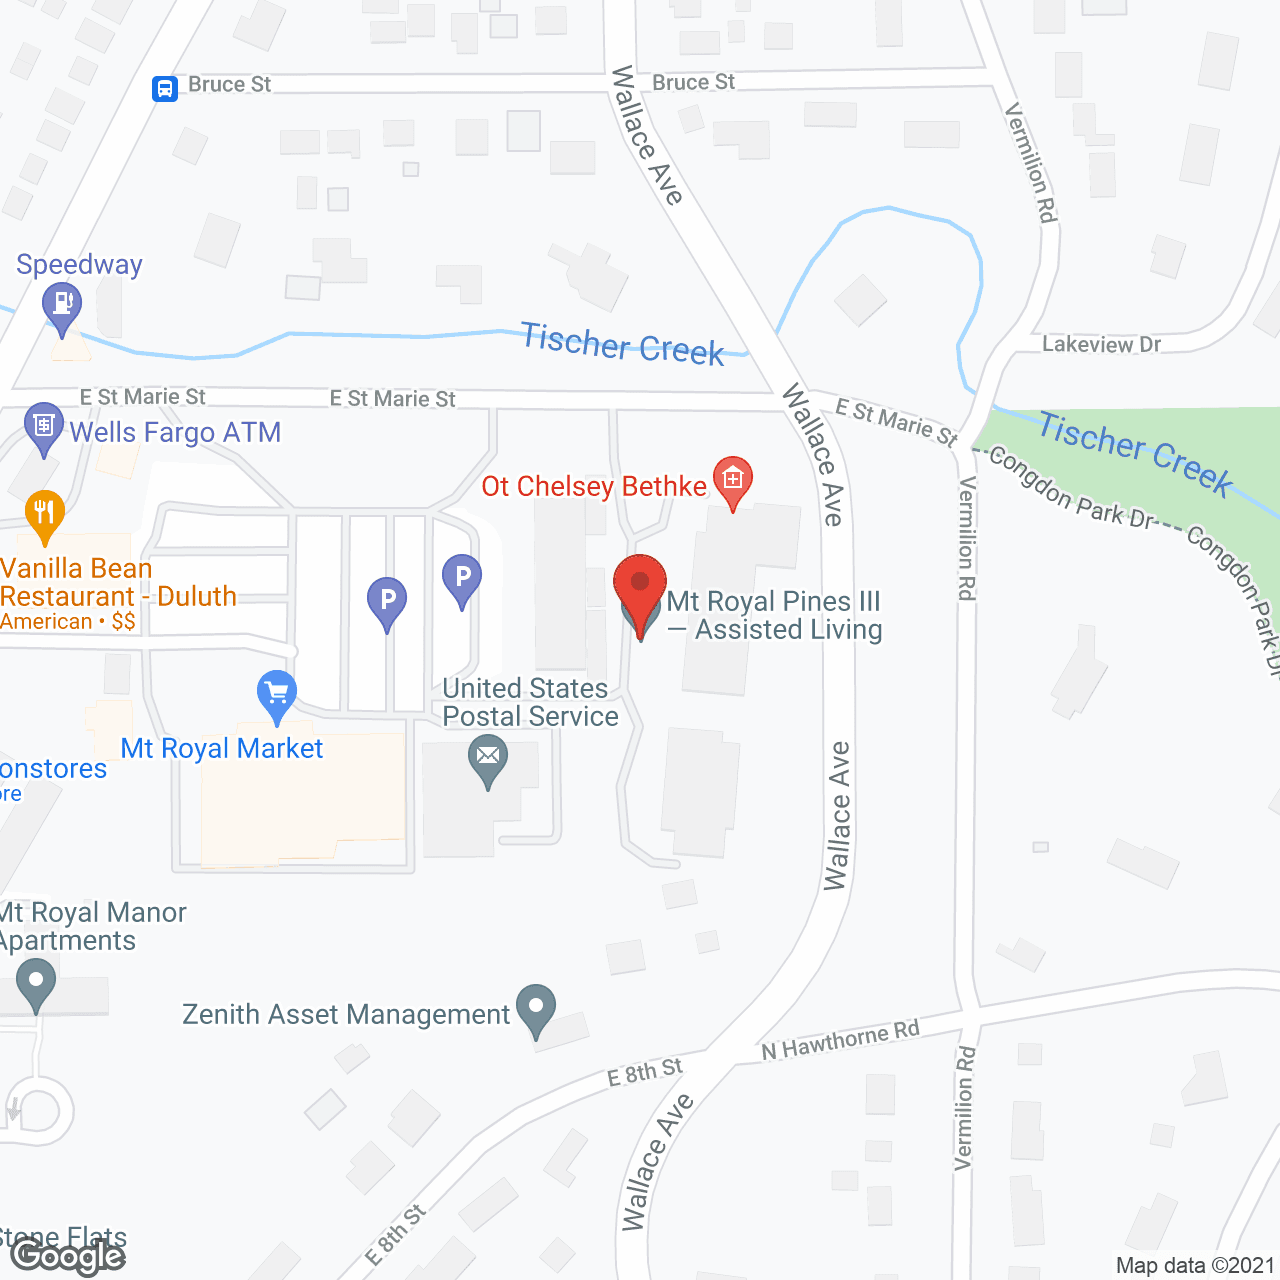 Mount Royal Pines III in google map